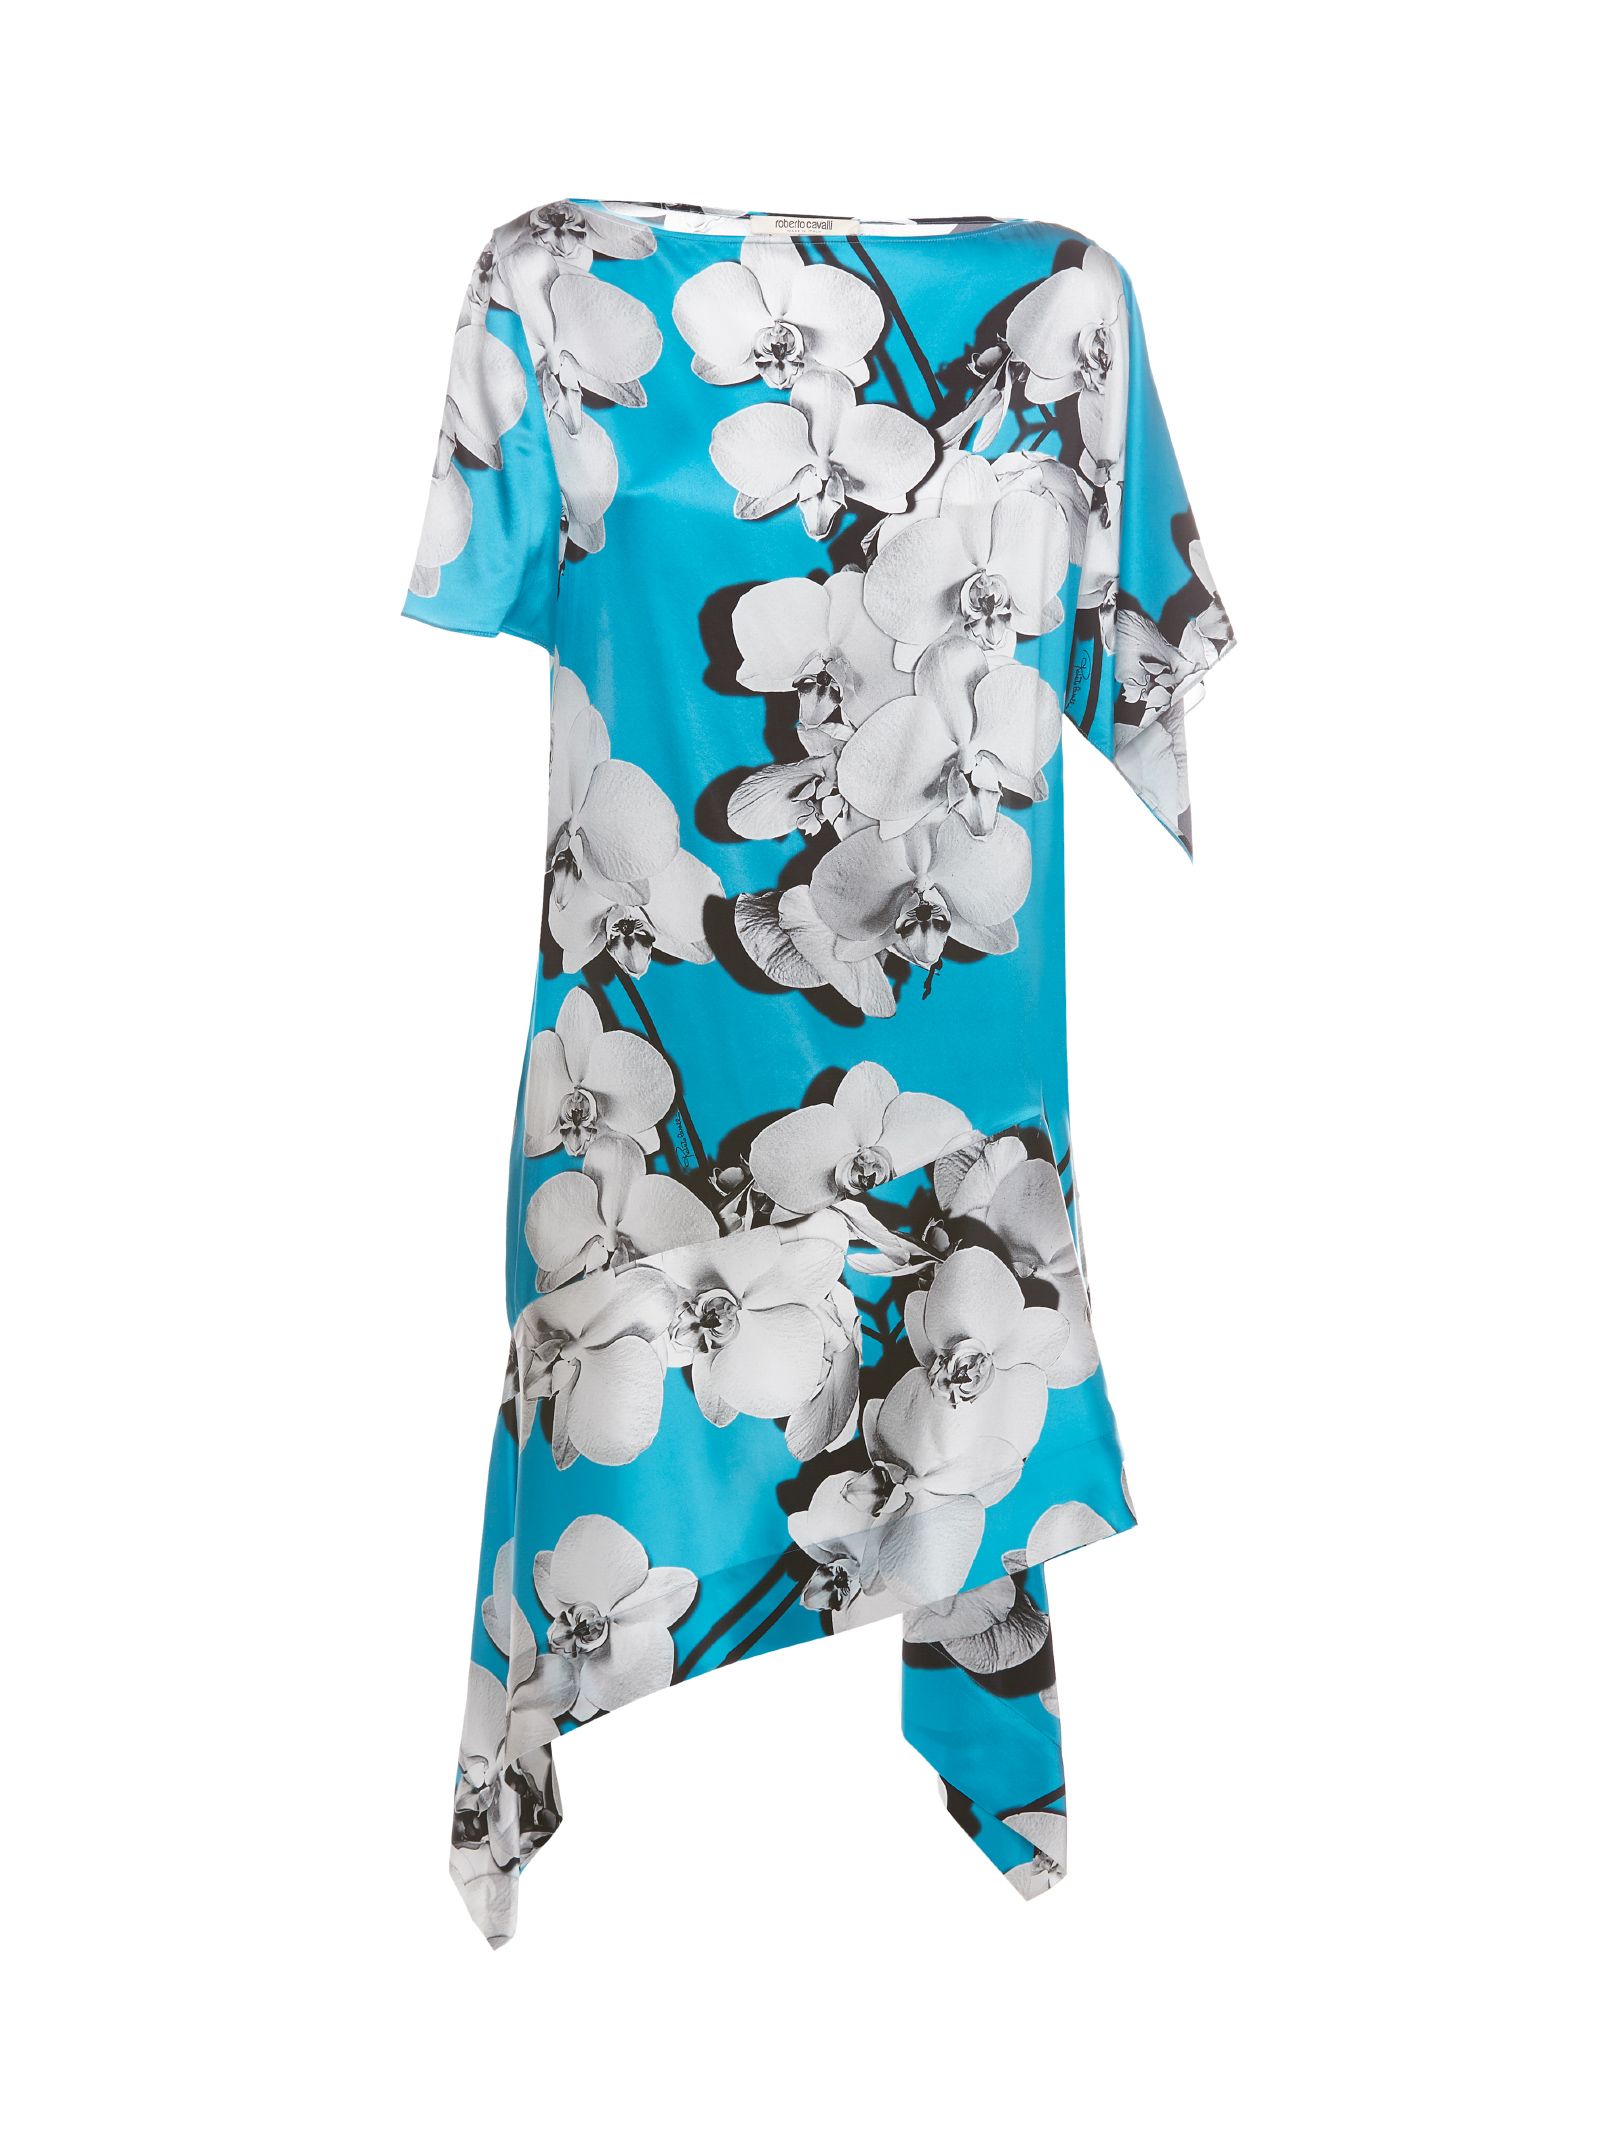 dressing gownRTO CAVALLI DRESS,10857839